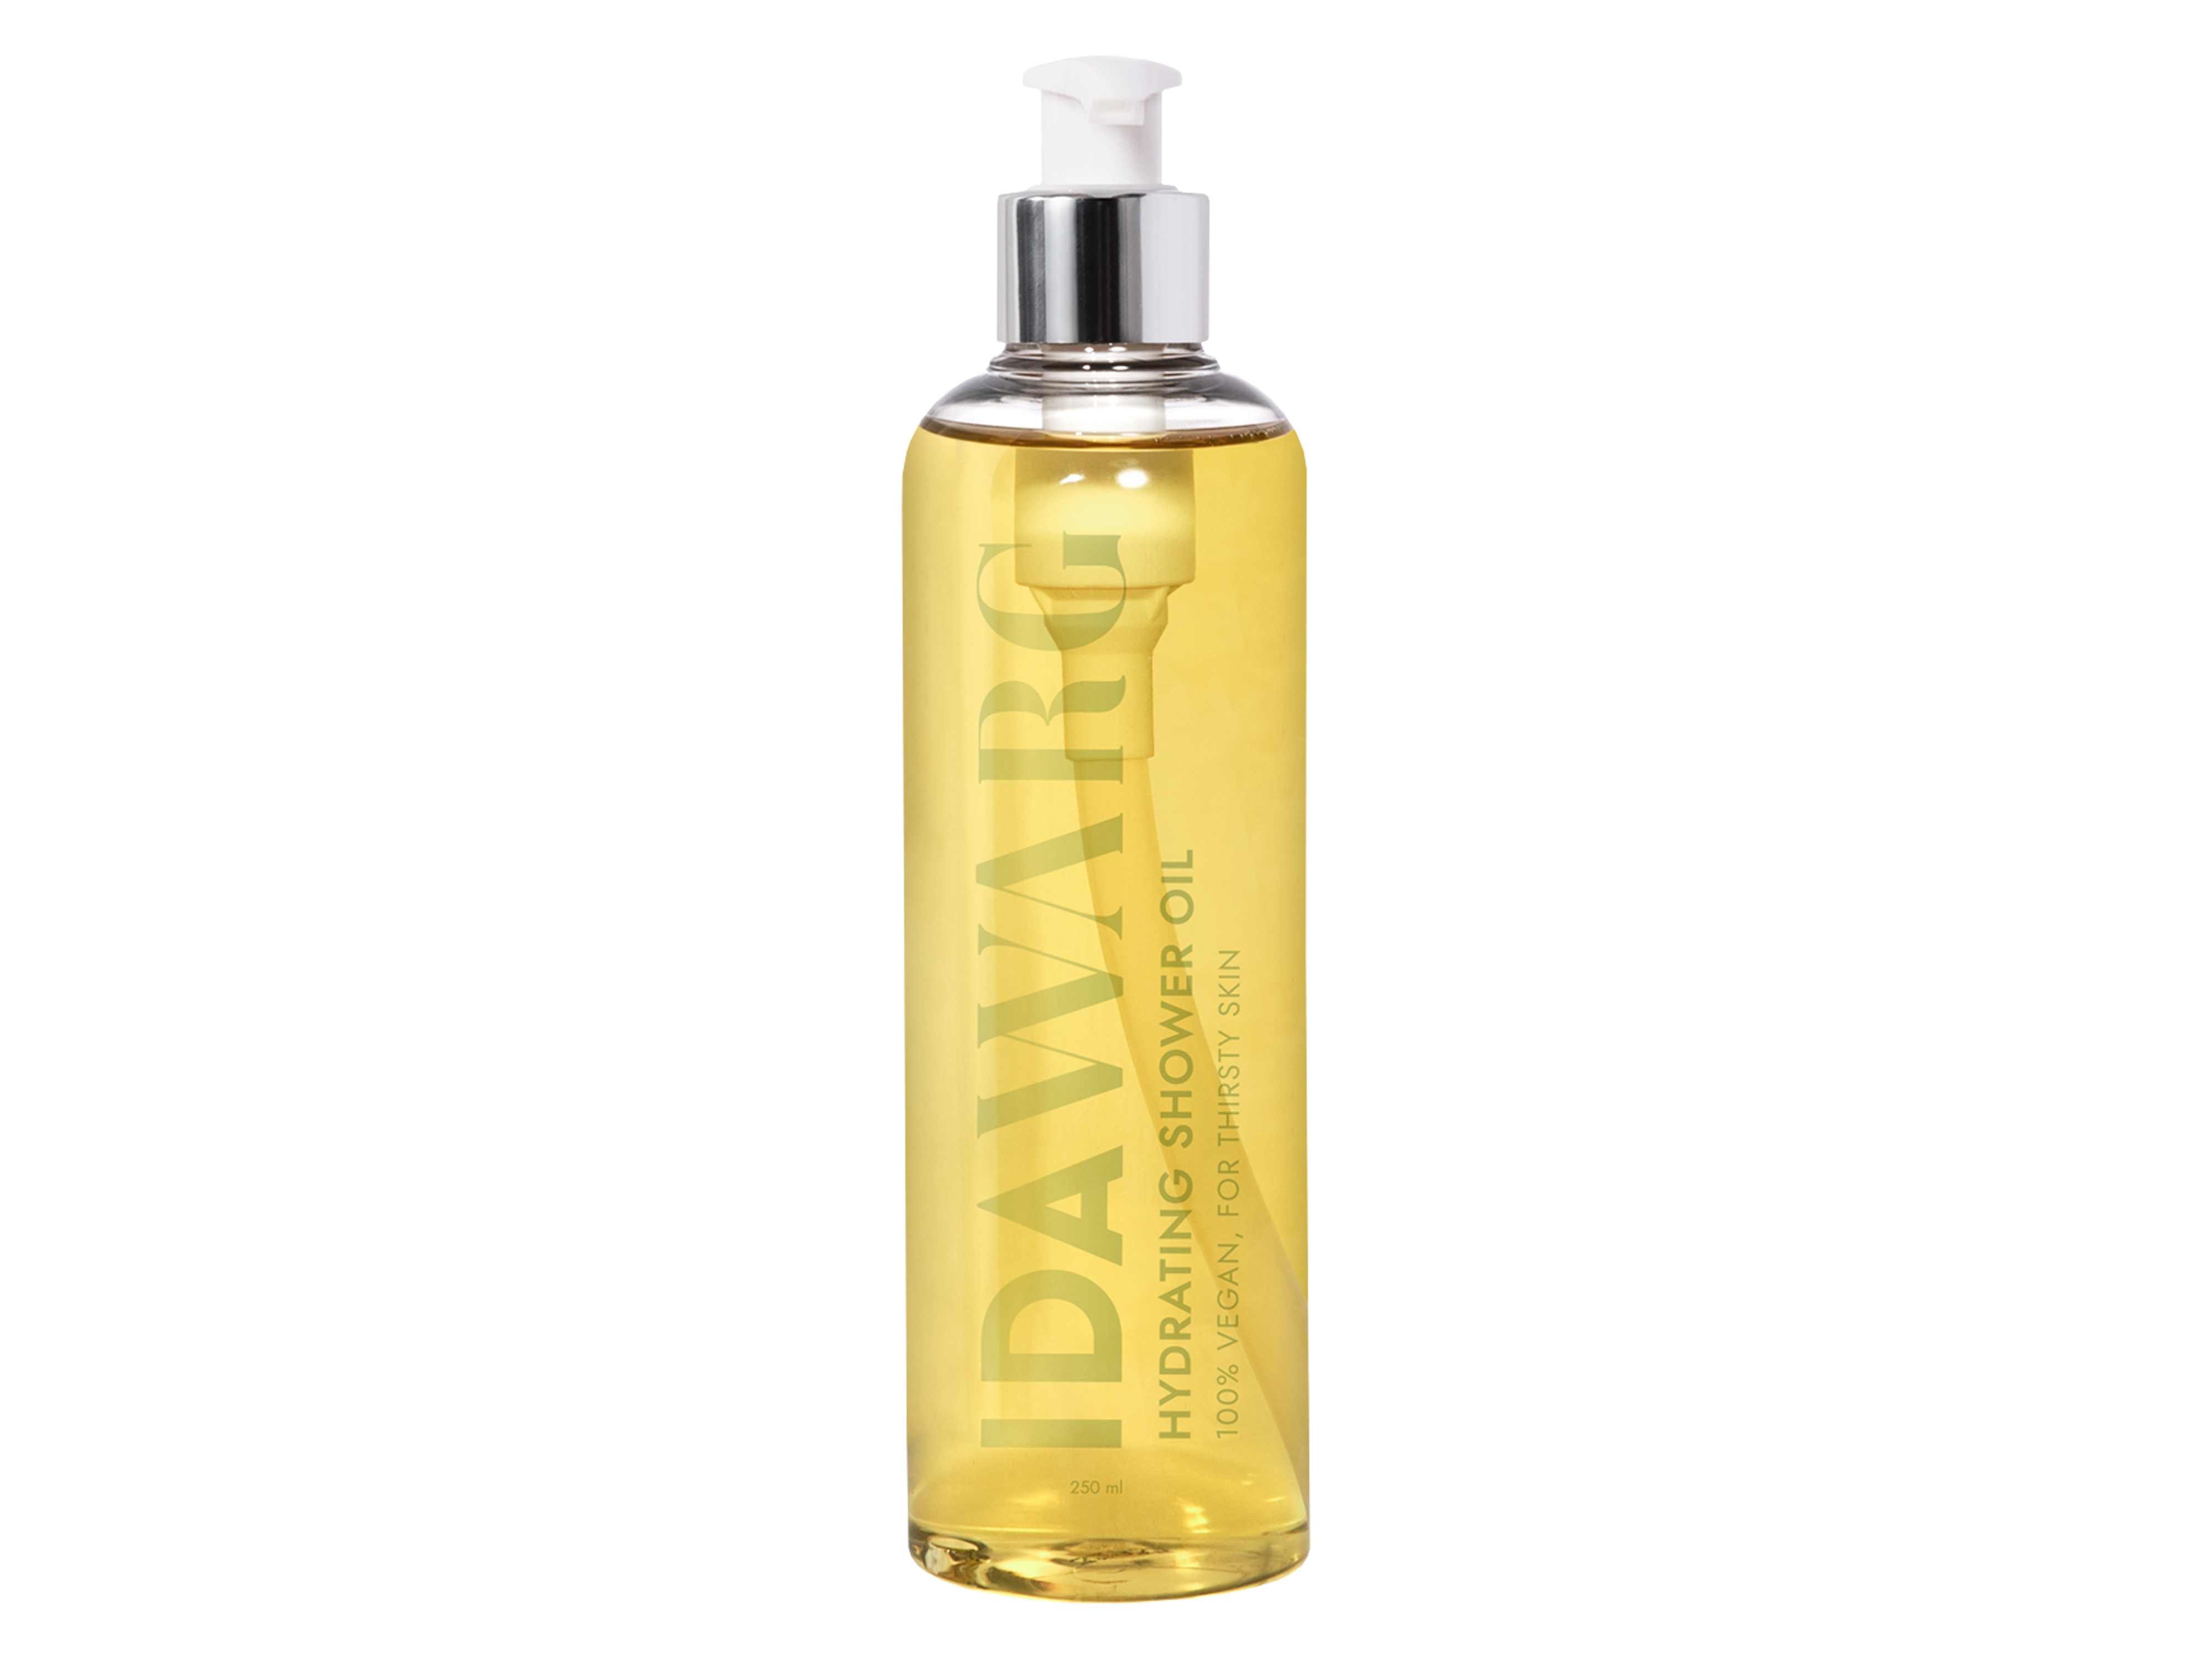 Ida Warg Beauty Hydrating Shower Oil, 250 ml